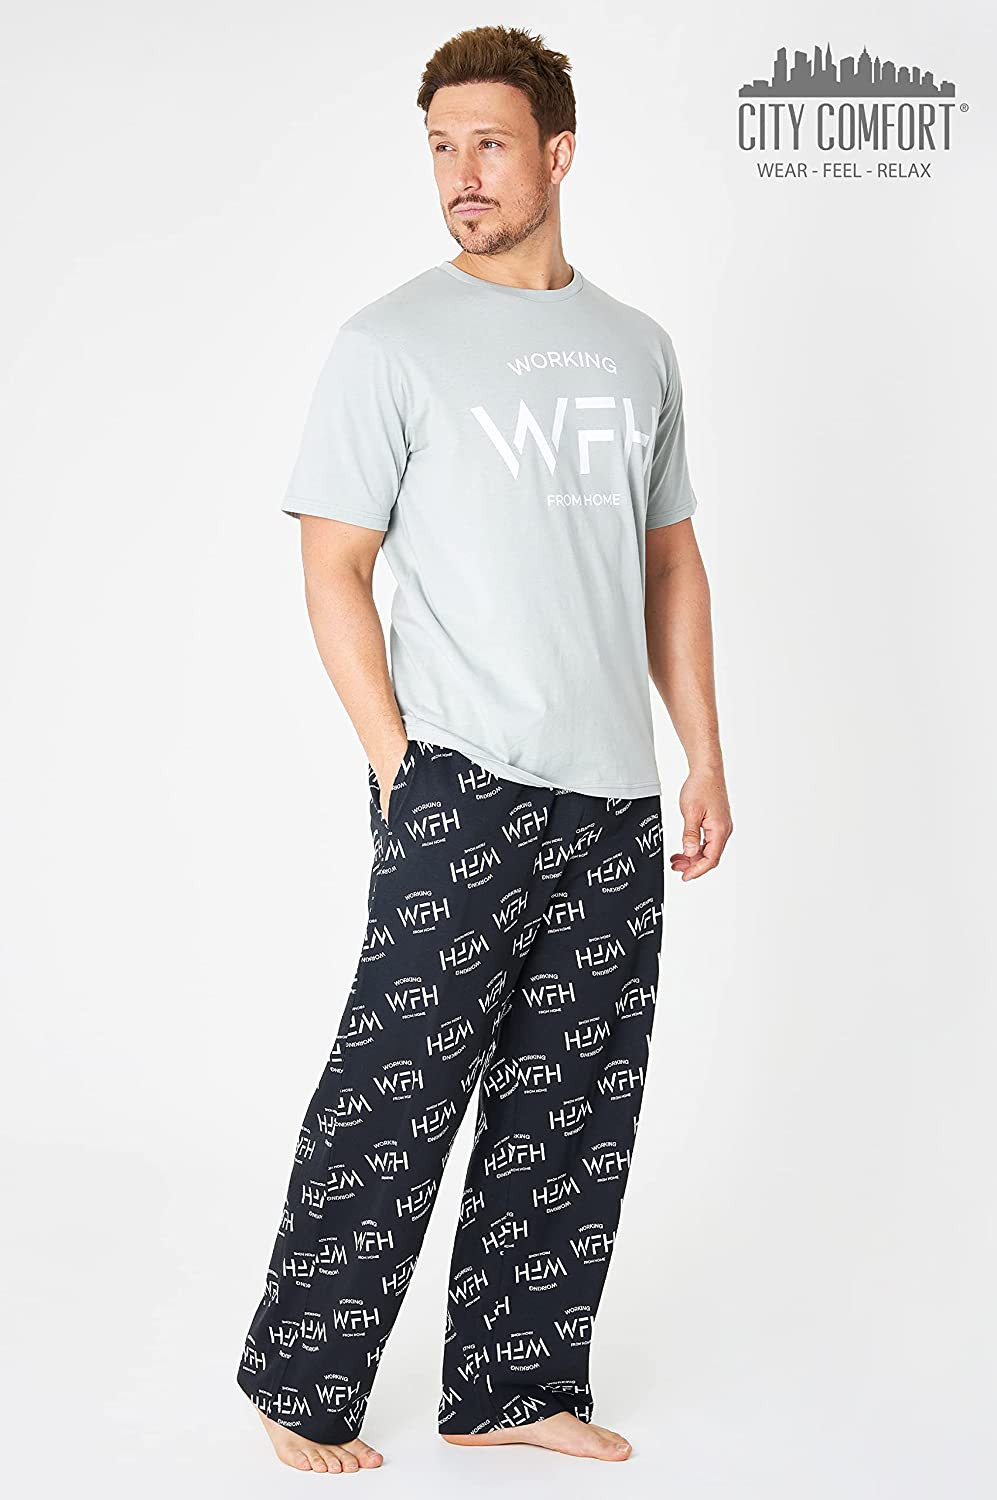 Pijamas para Hombre 100% algodón súper Suave para Hombre, Conjunto de Pijamas para Hombre, Ropa de Dormir, Ropa de Estar, chándal (Gris, 3XL)